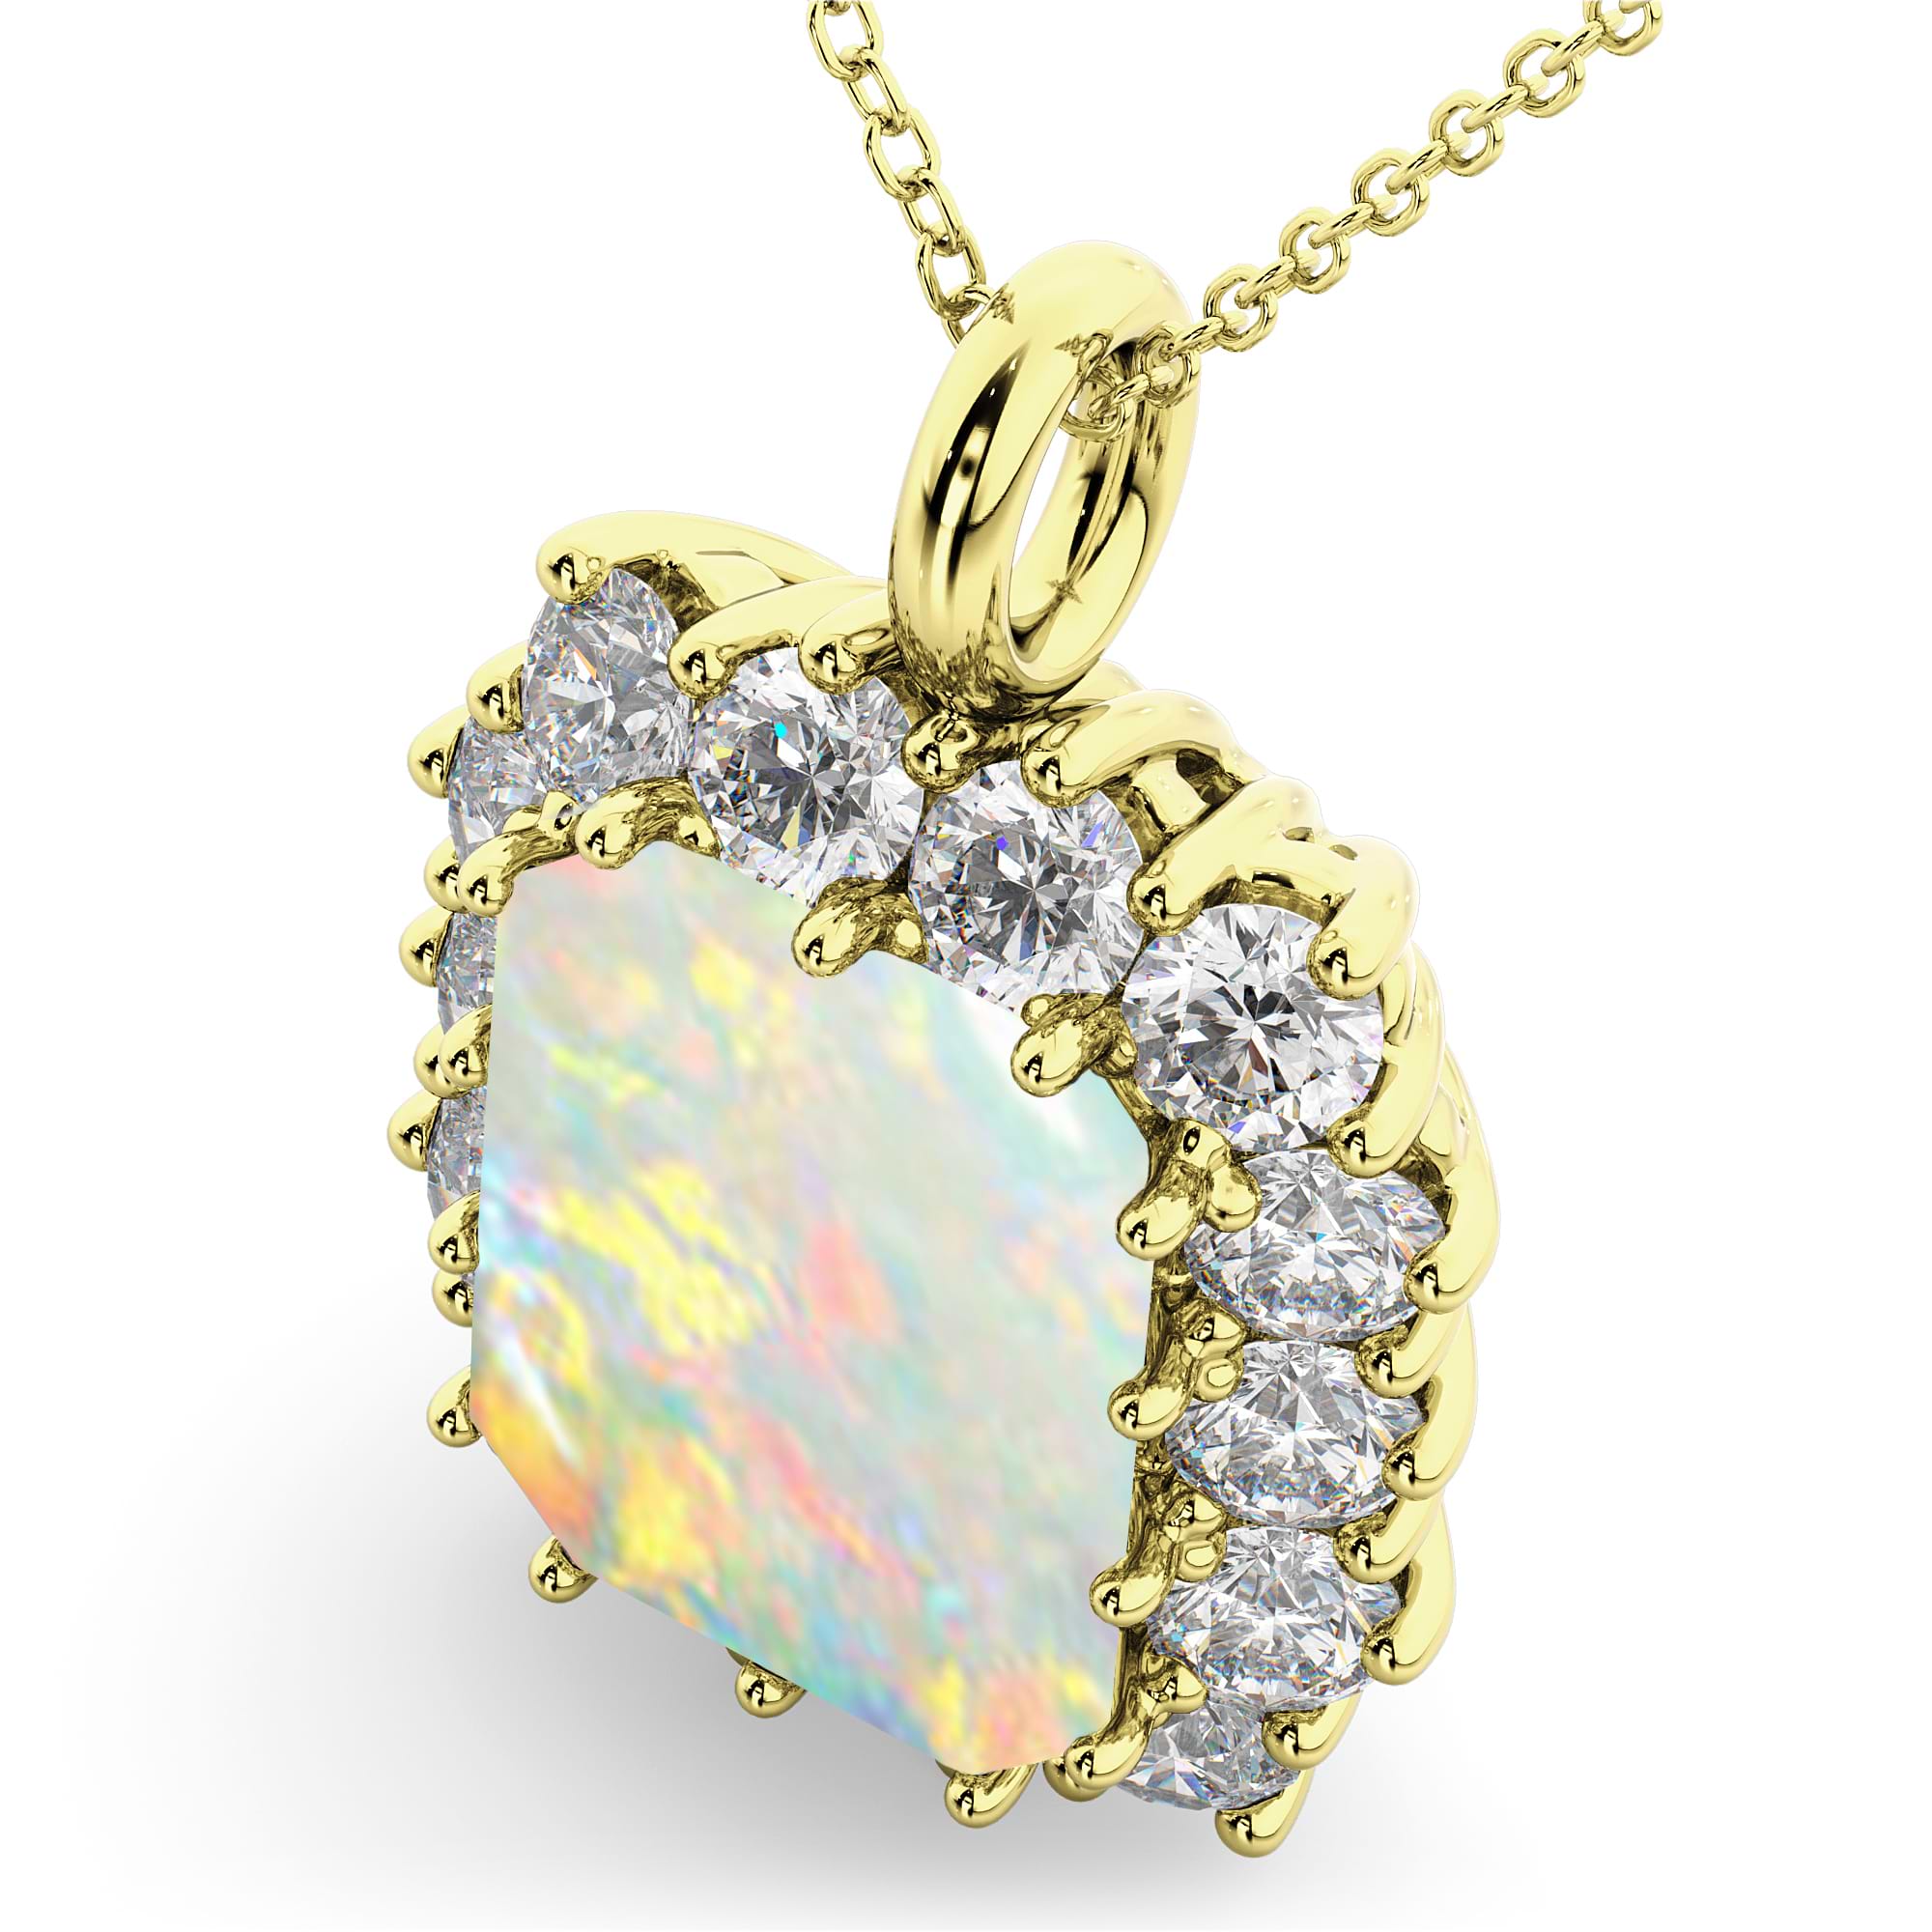 Emerald Cut Opal & Diamond Pendant 14k Yellow Gold (5.68ct)